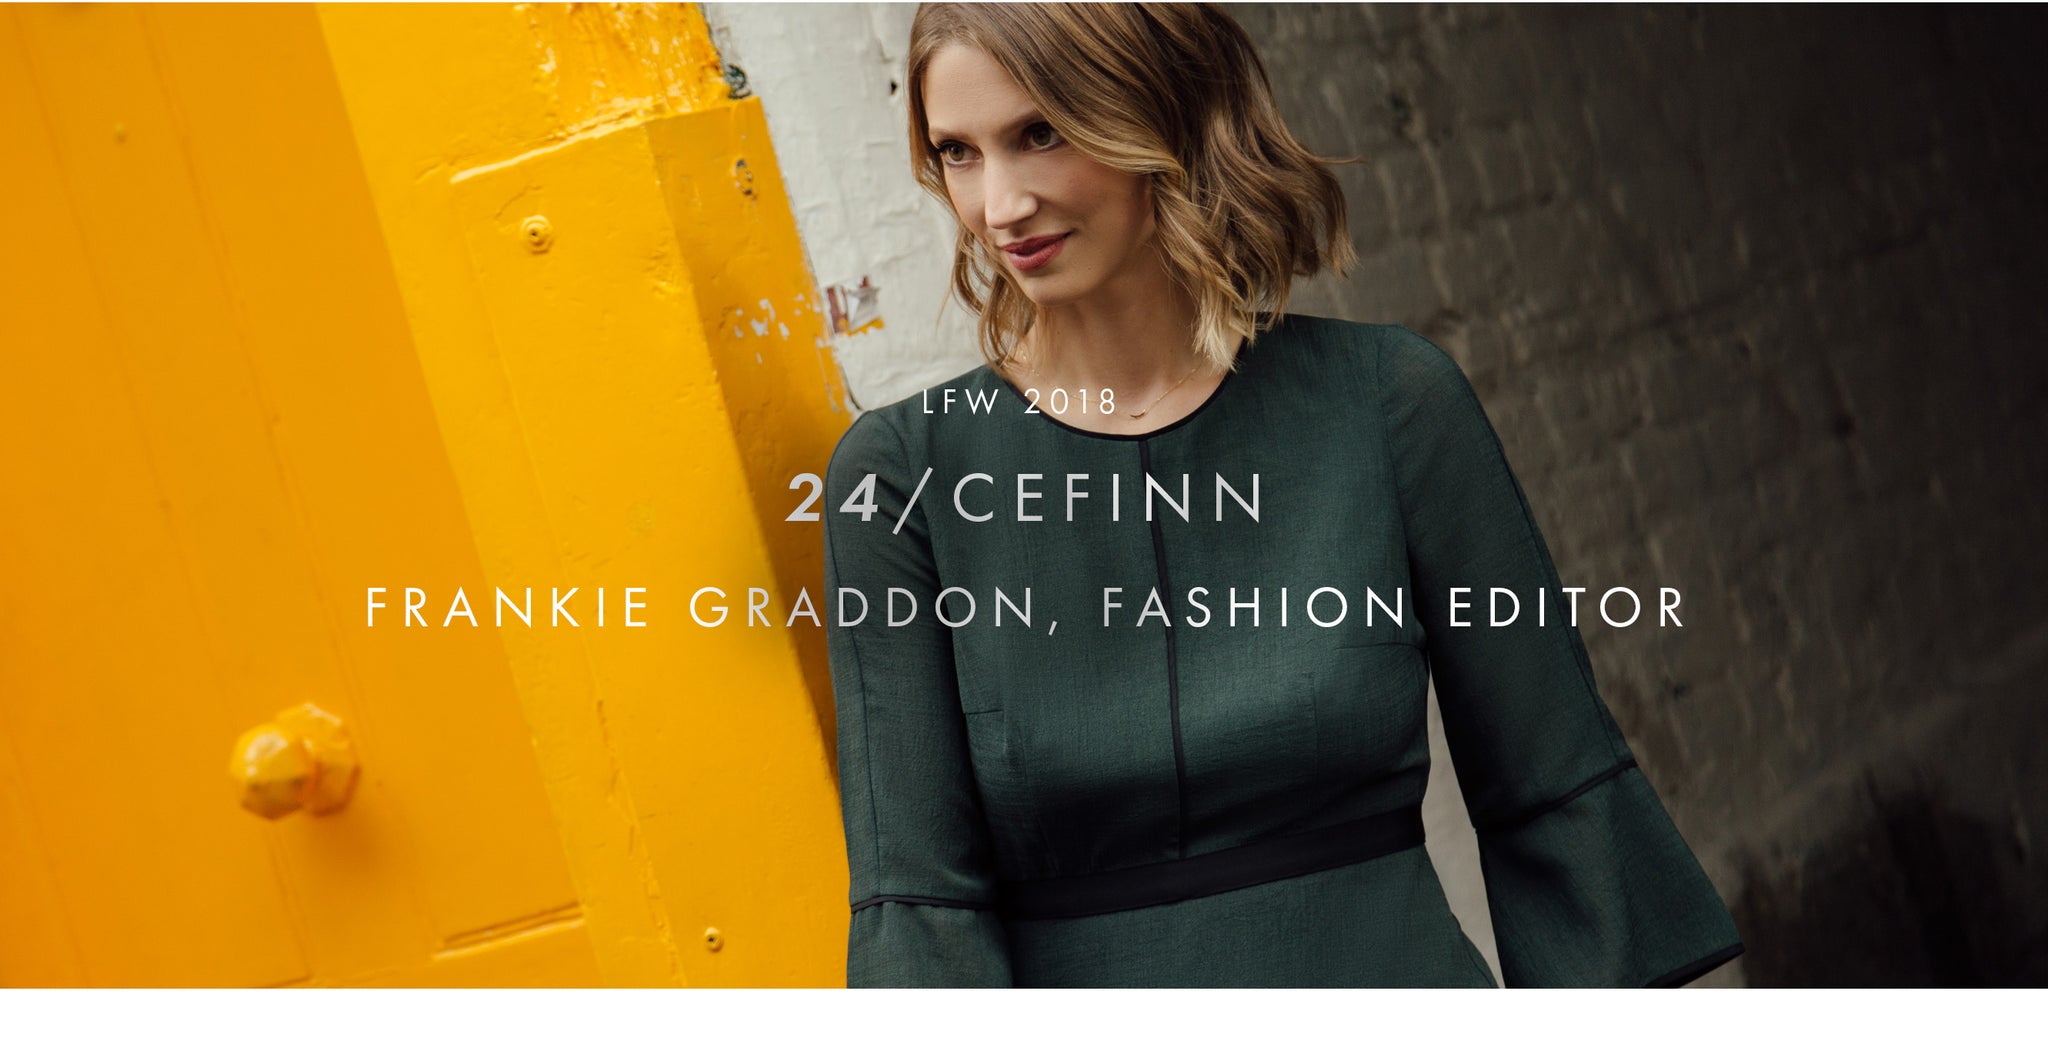 24/Cefinn - Frankie Graddon